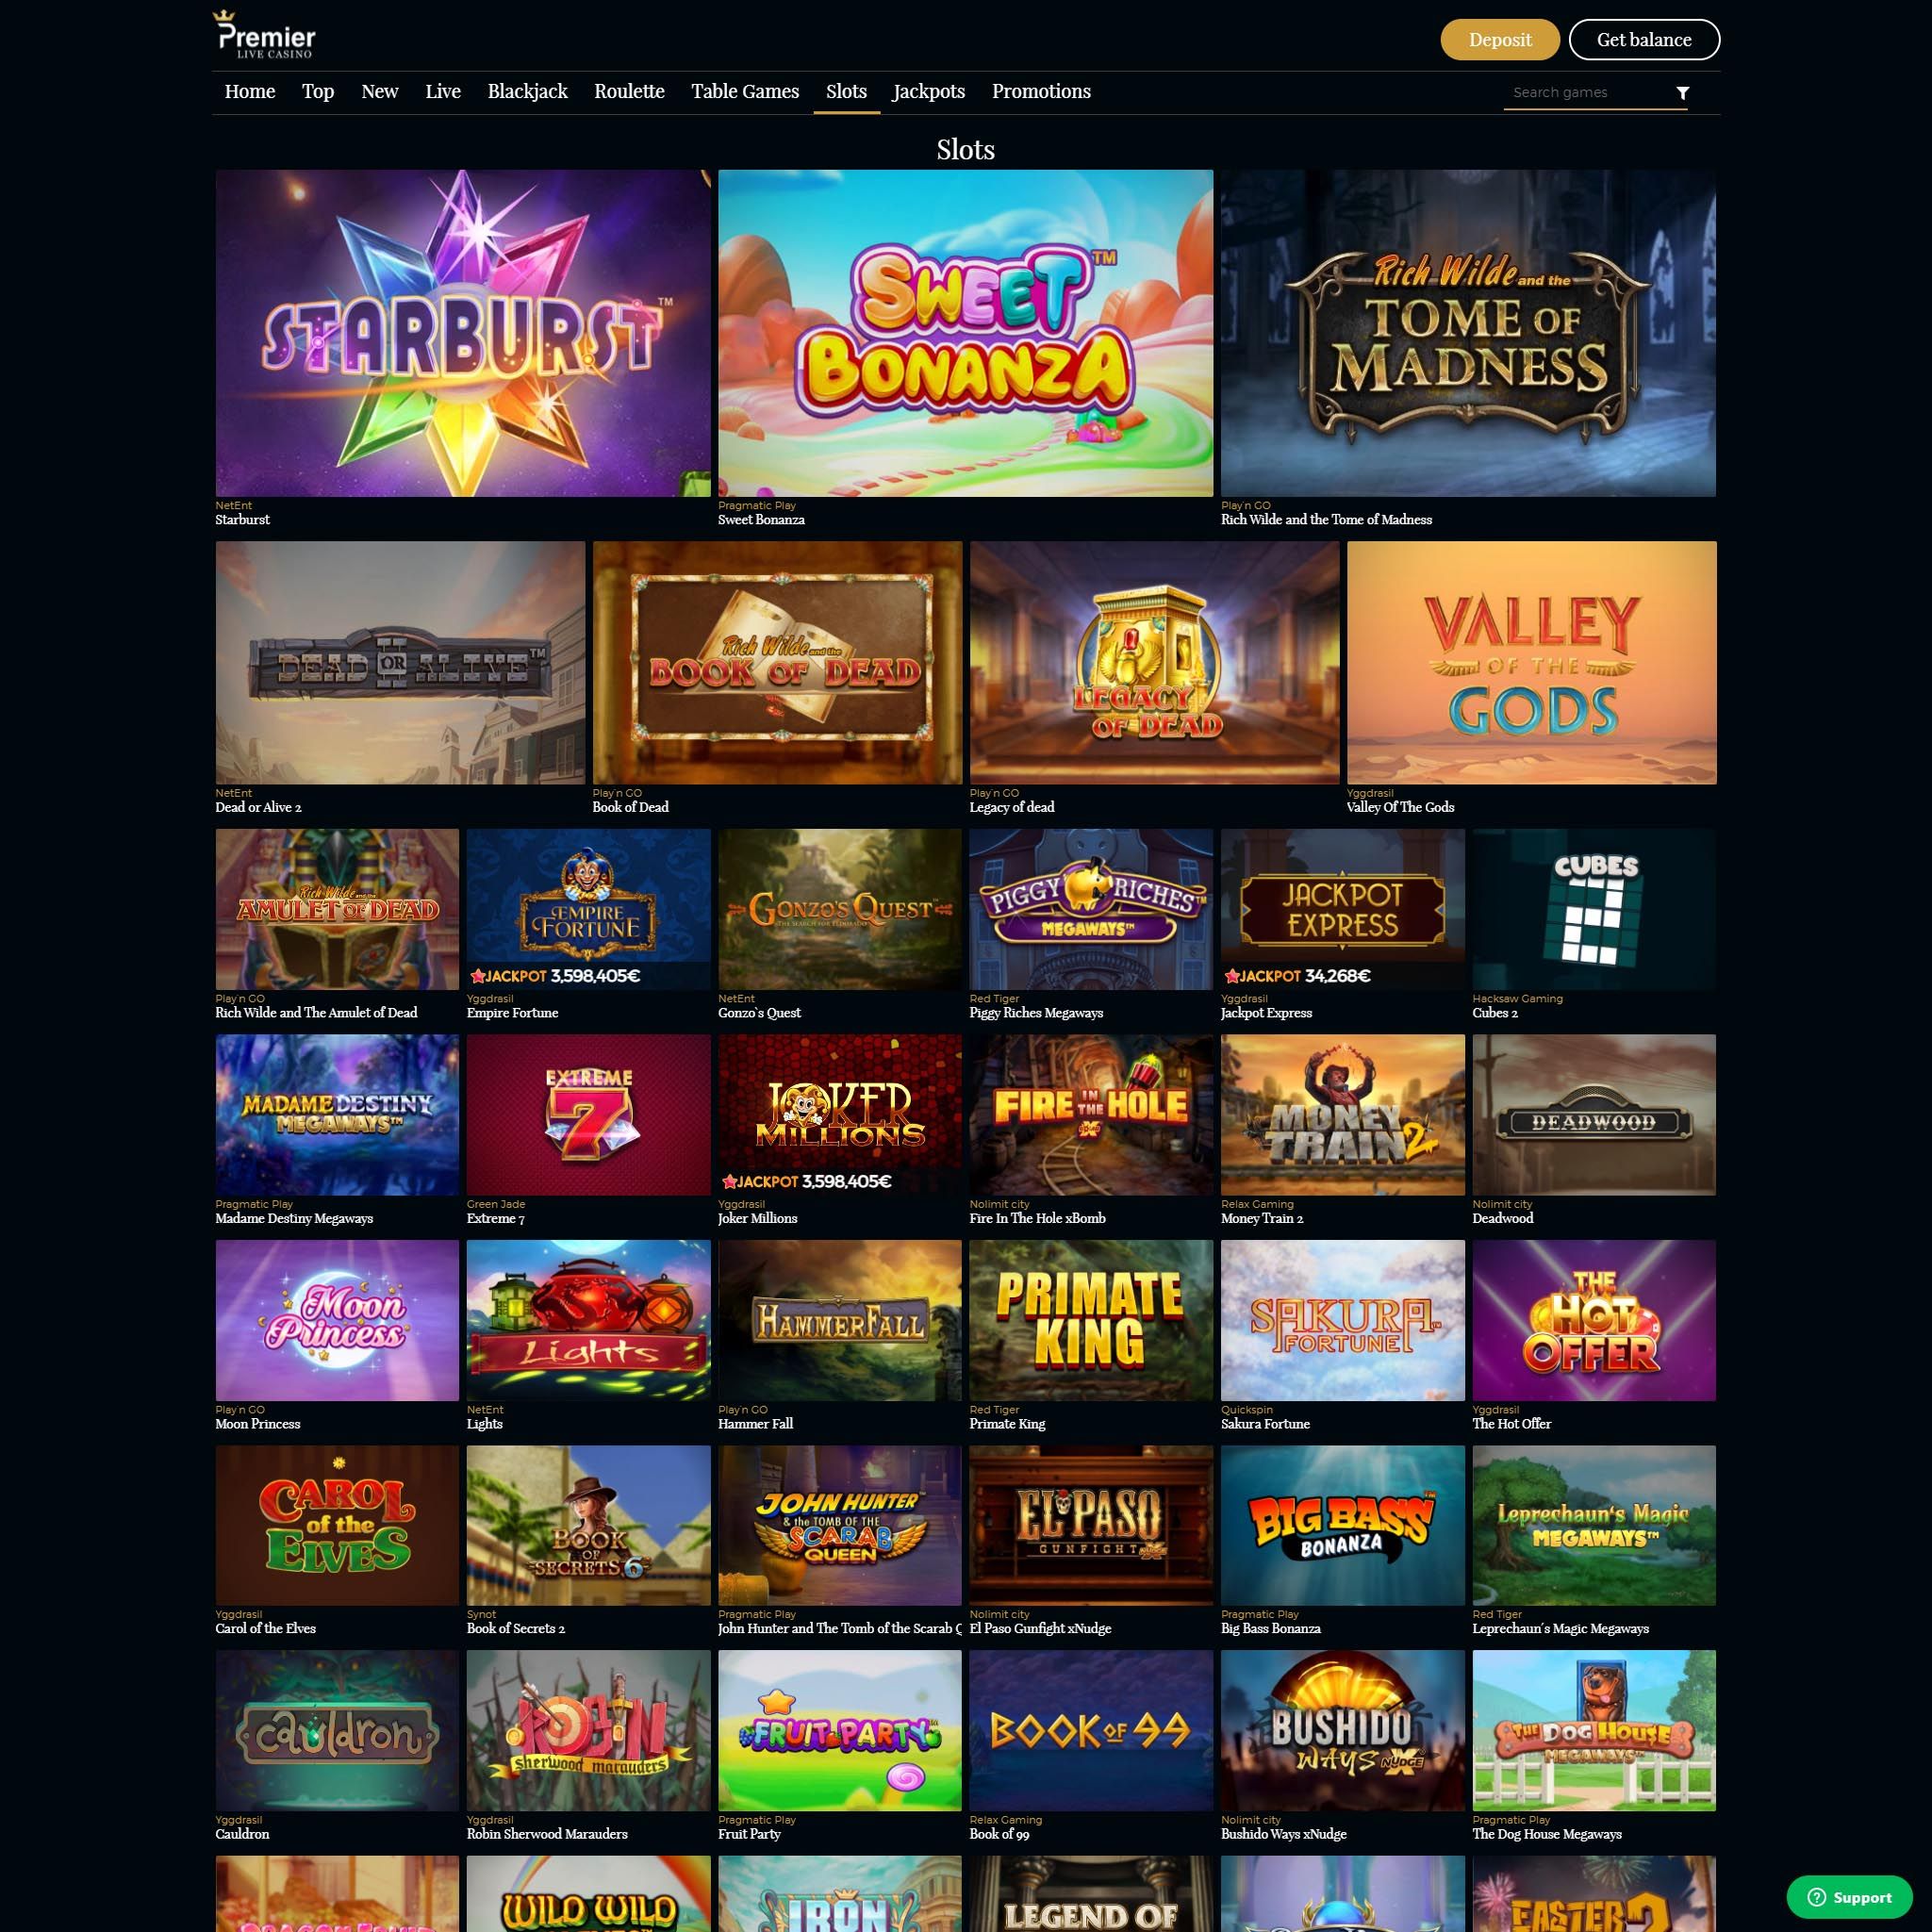 Premier Live Casino full games catalogue